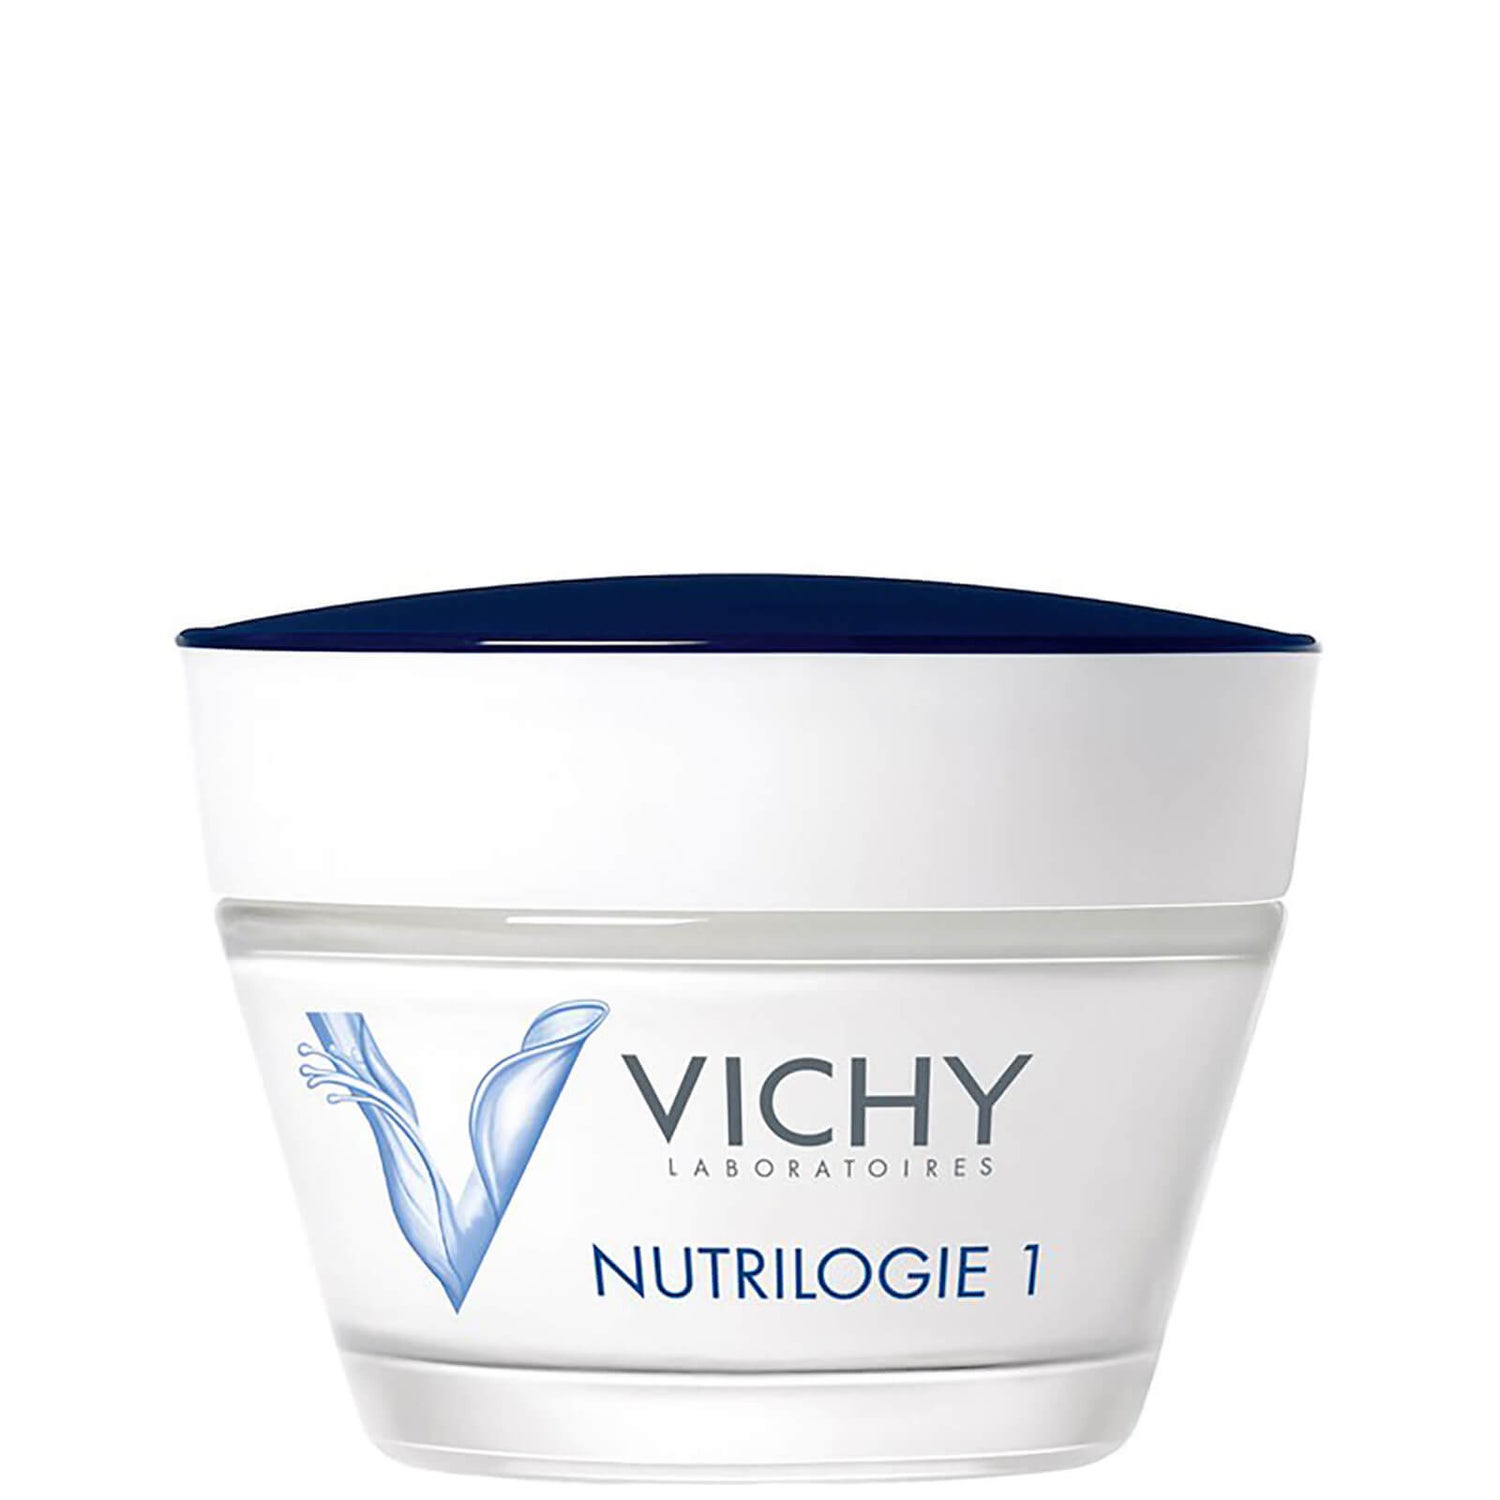 VICHY Nutrilogie 1 Daily Day Care 50ml